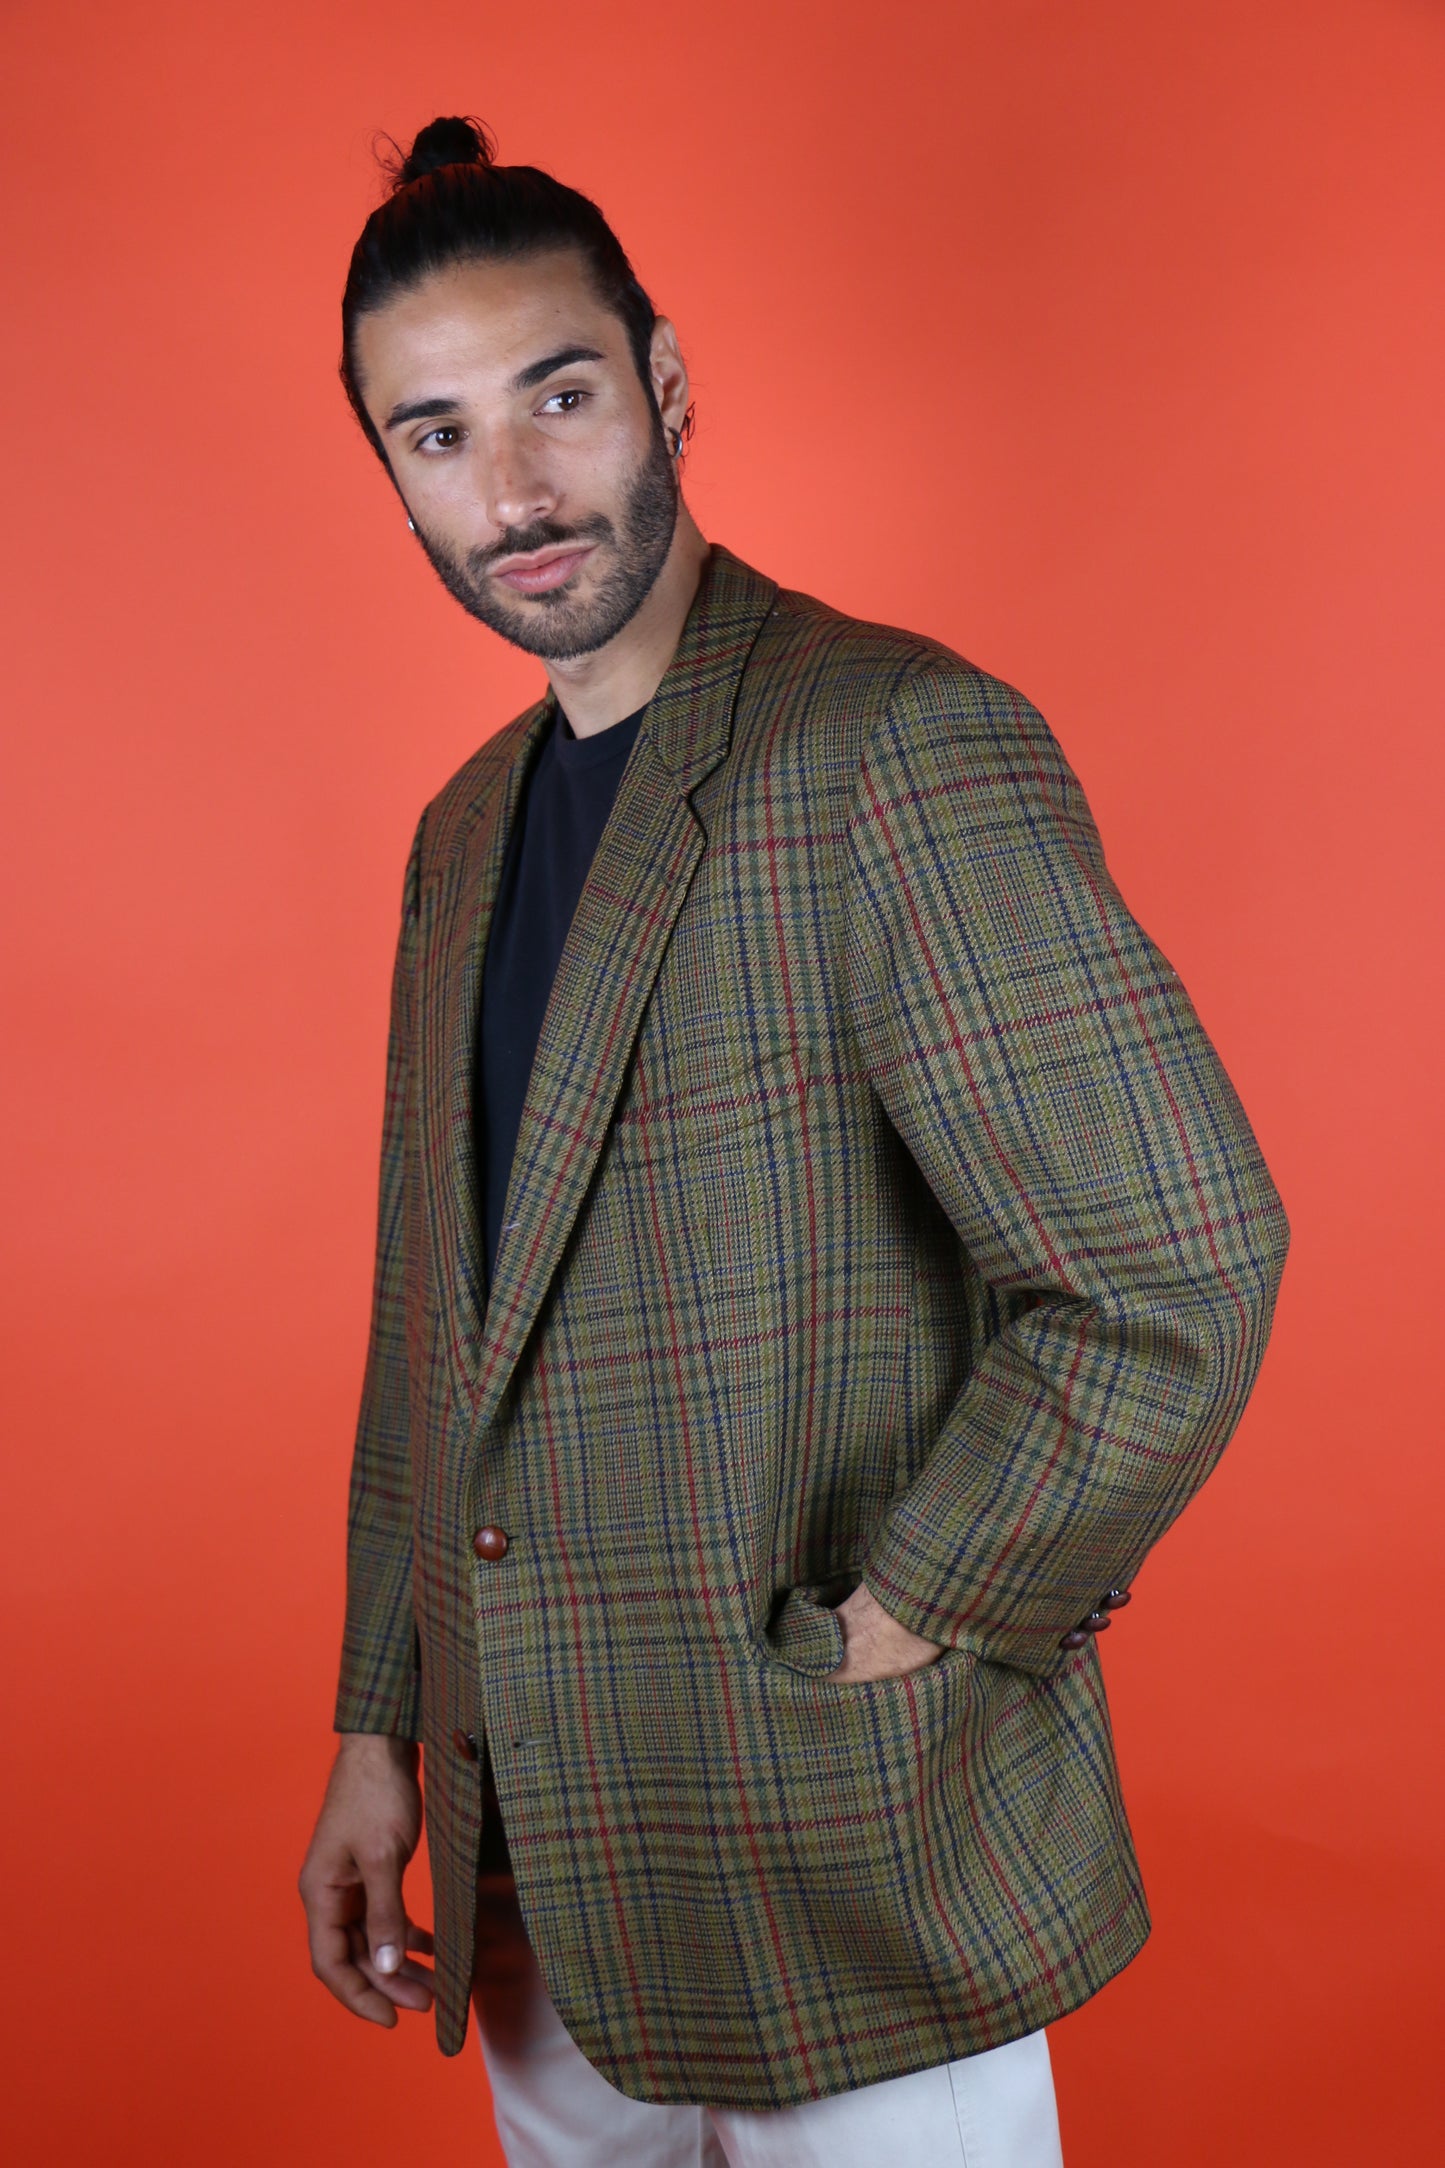 Burberrys Tweed Jacket - vintage clothing clochard92.com